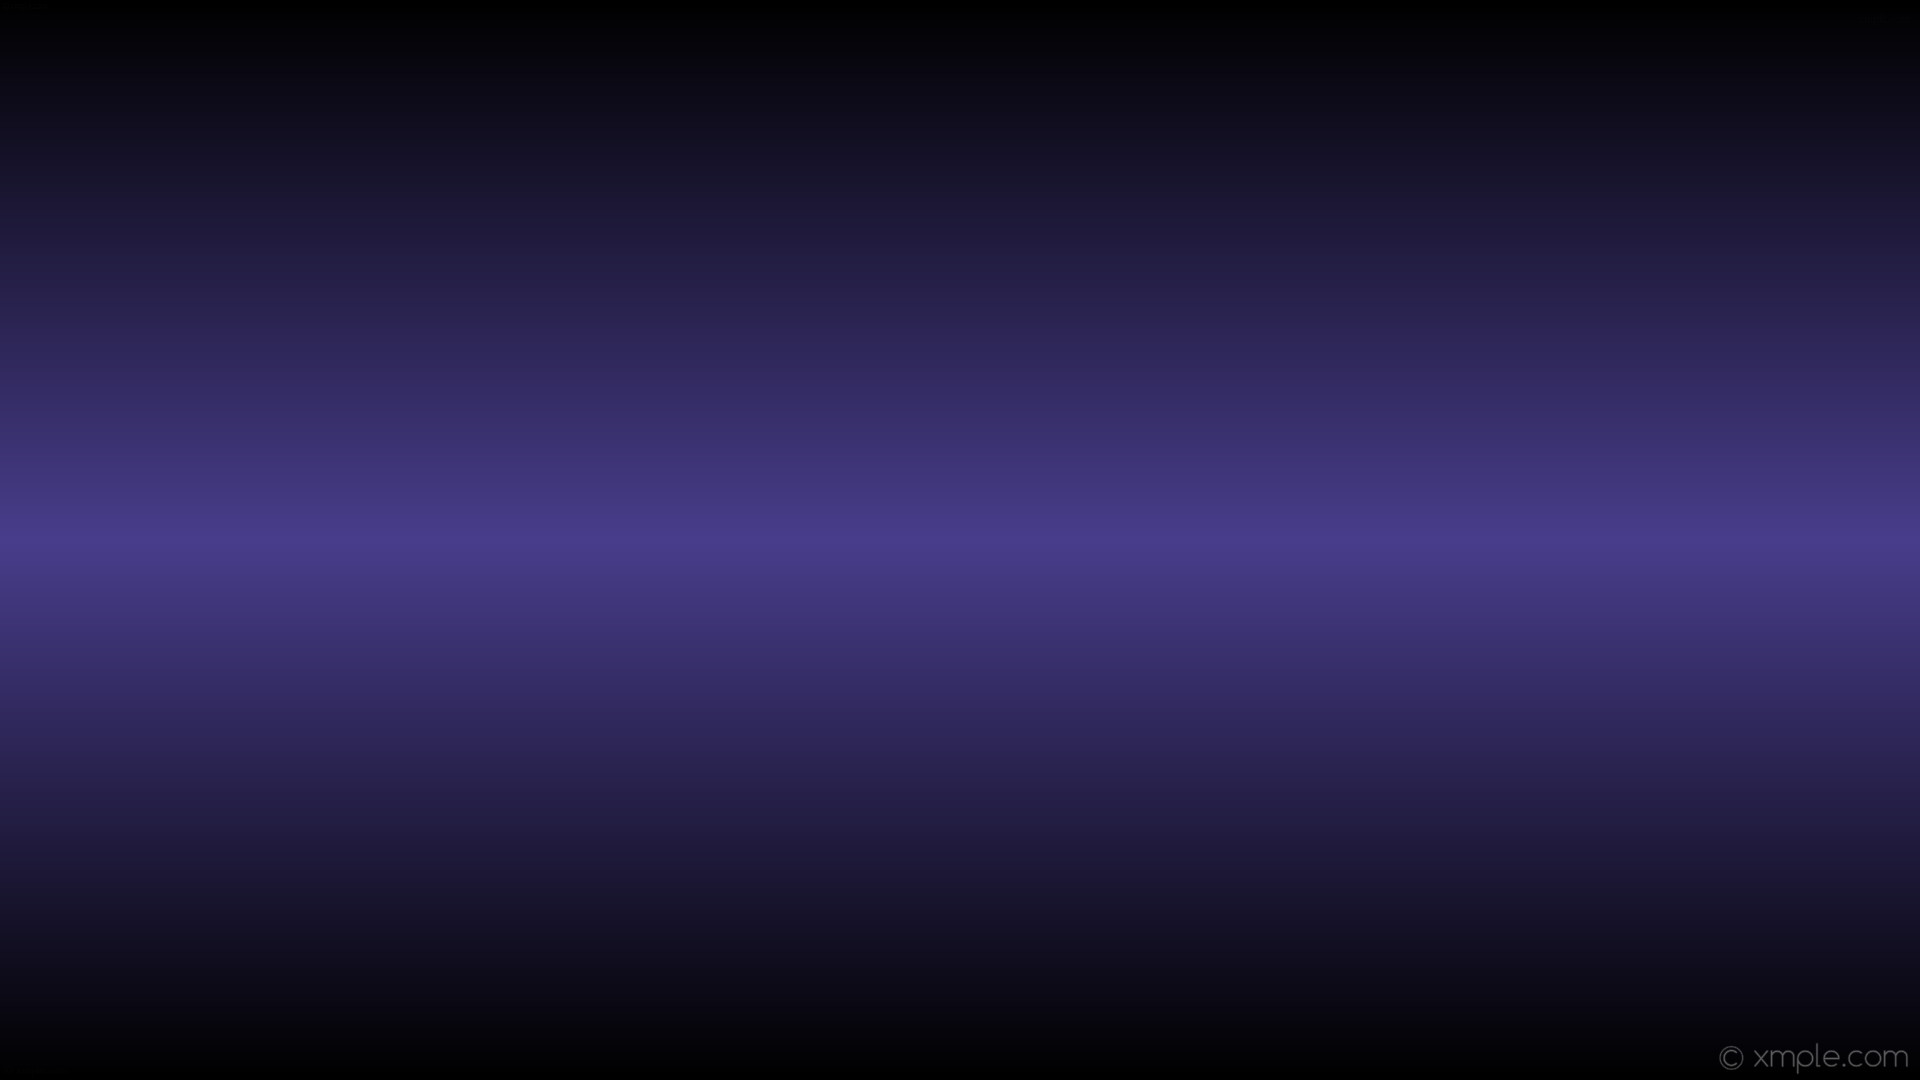 1920x1080 wallpaper linear purple black gradient highlight dark slate blue #000000  #483d8b 270Â° 50